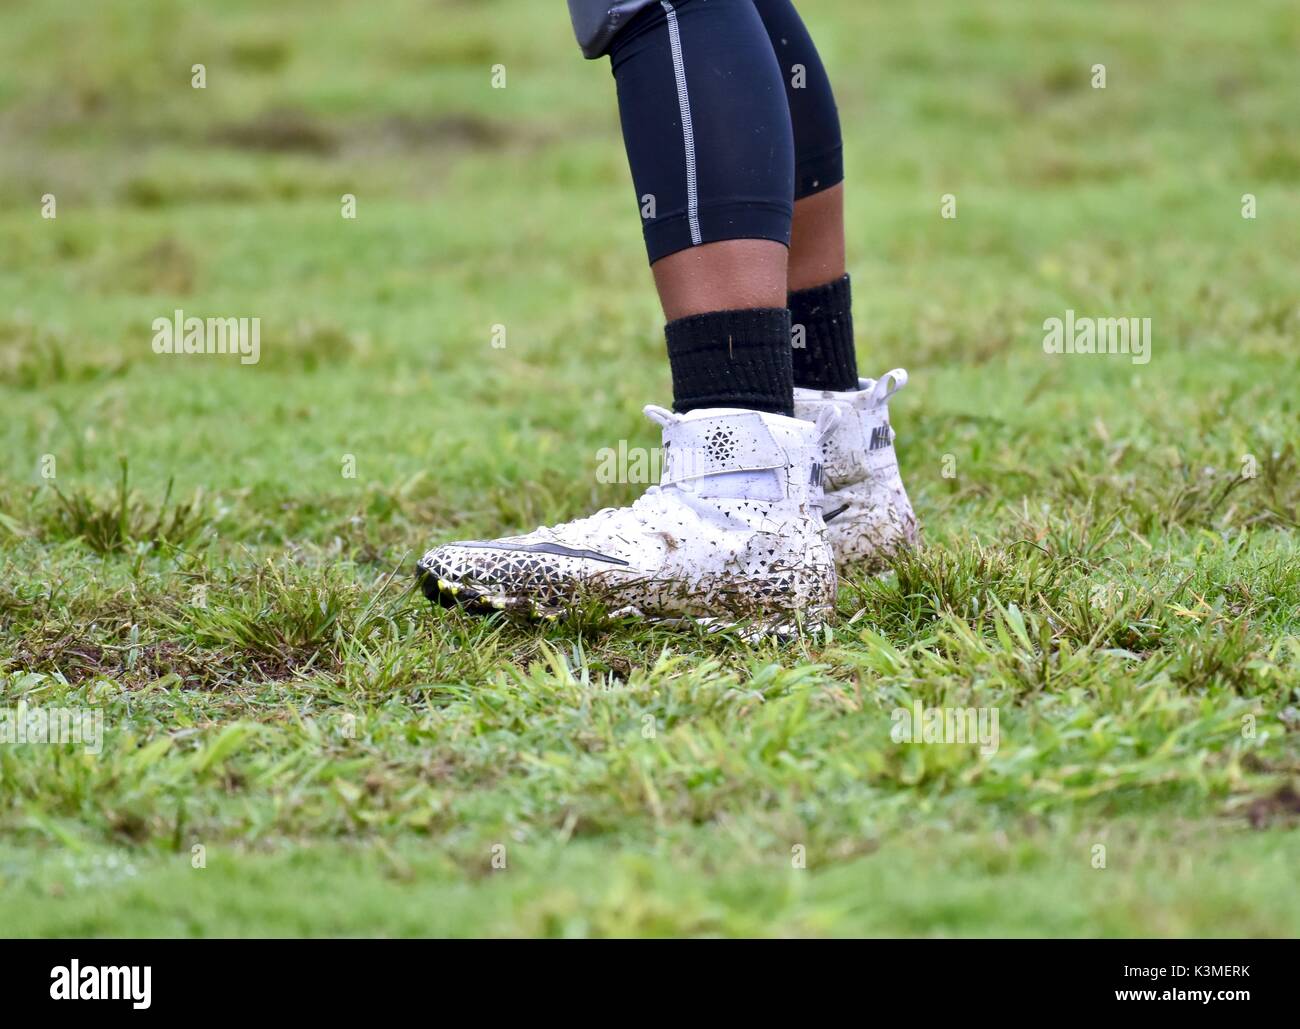 American football players cleats Stock Photo - Alamy